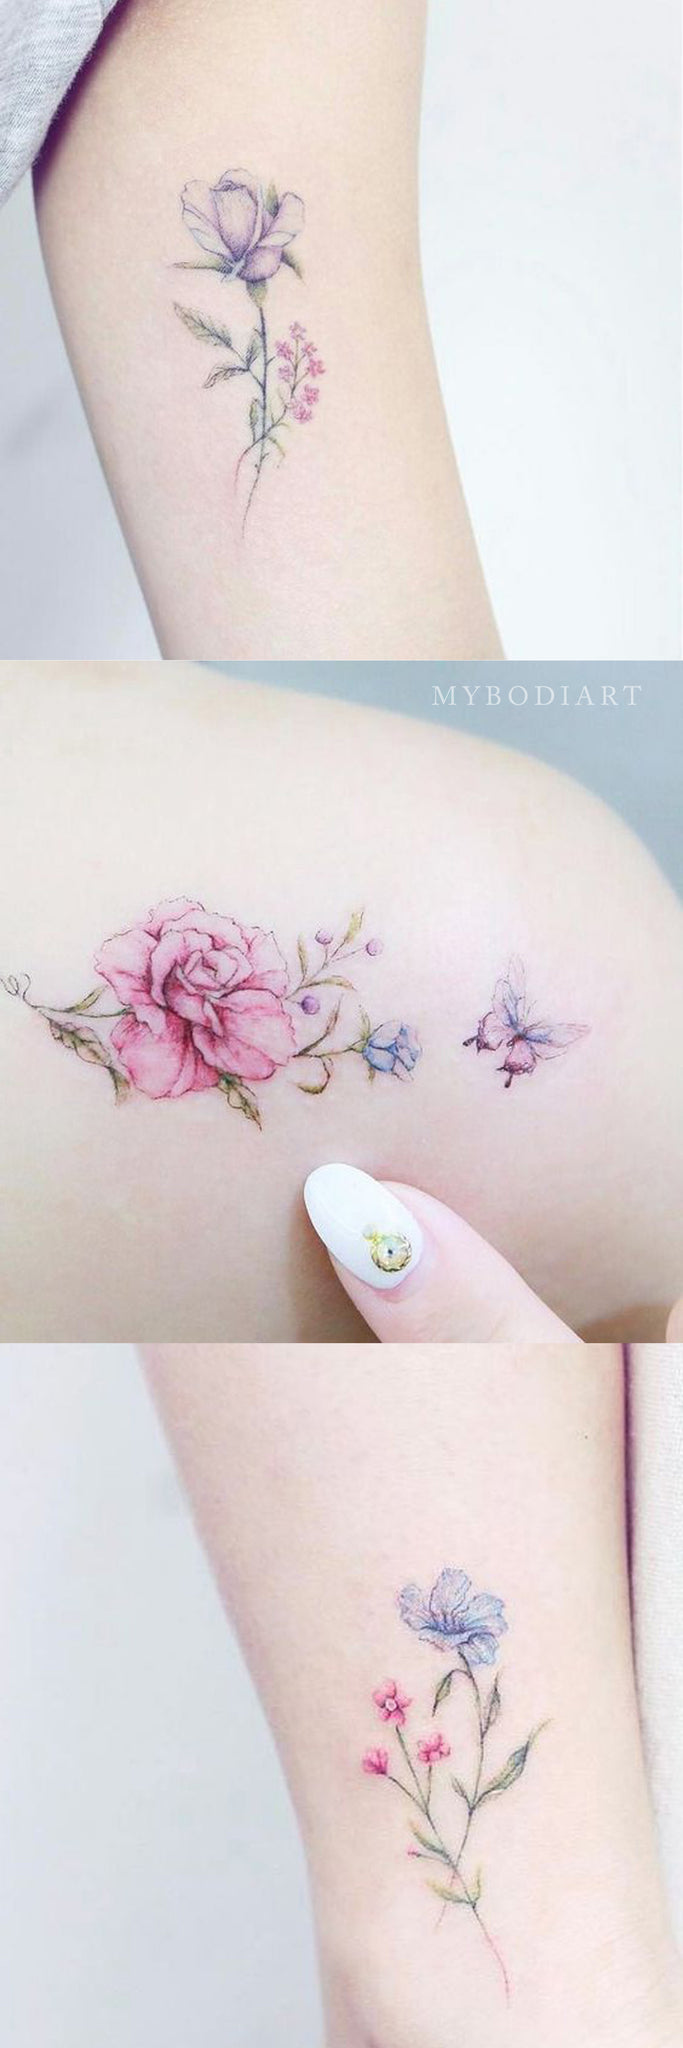 Delicate Watercolor Floral Flower Arm Shoulder Tattoo Ideas for Women -  ideas del tatuaje del brazo de la flor de acuarela para las mujeres - www.MyBodiArt.com